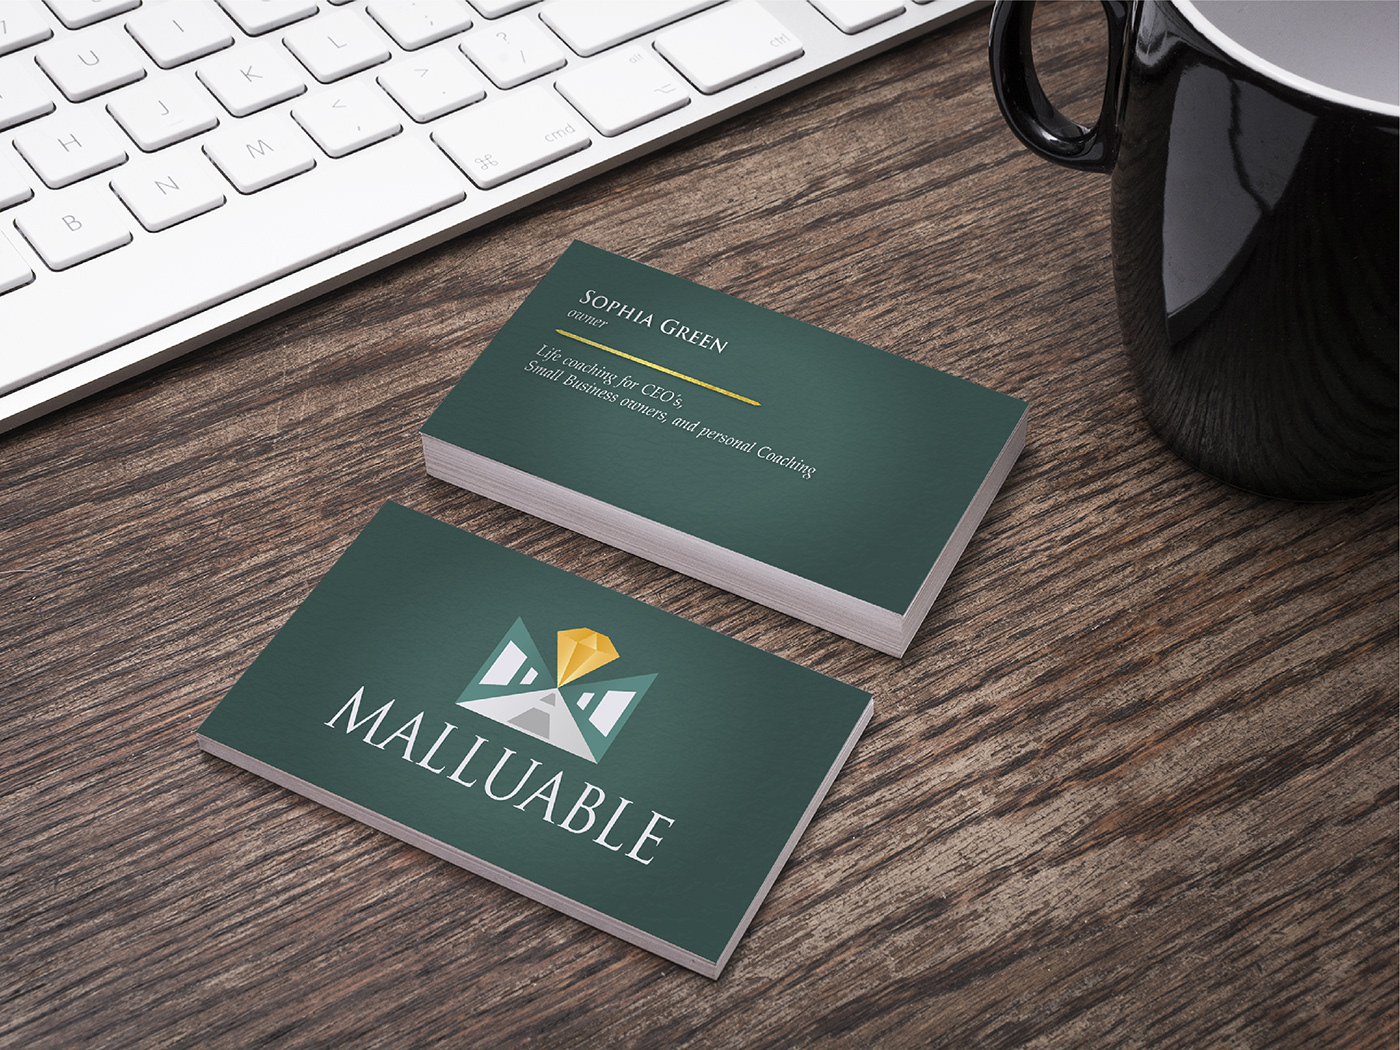 malluable - Business Card Mockup